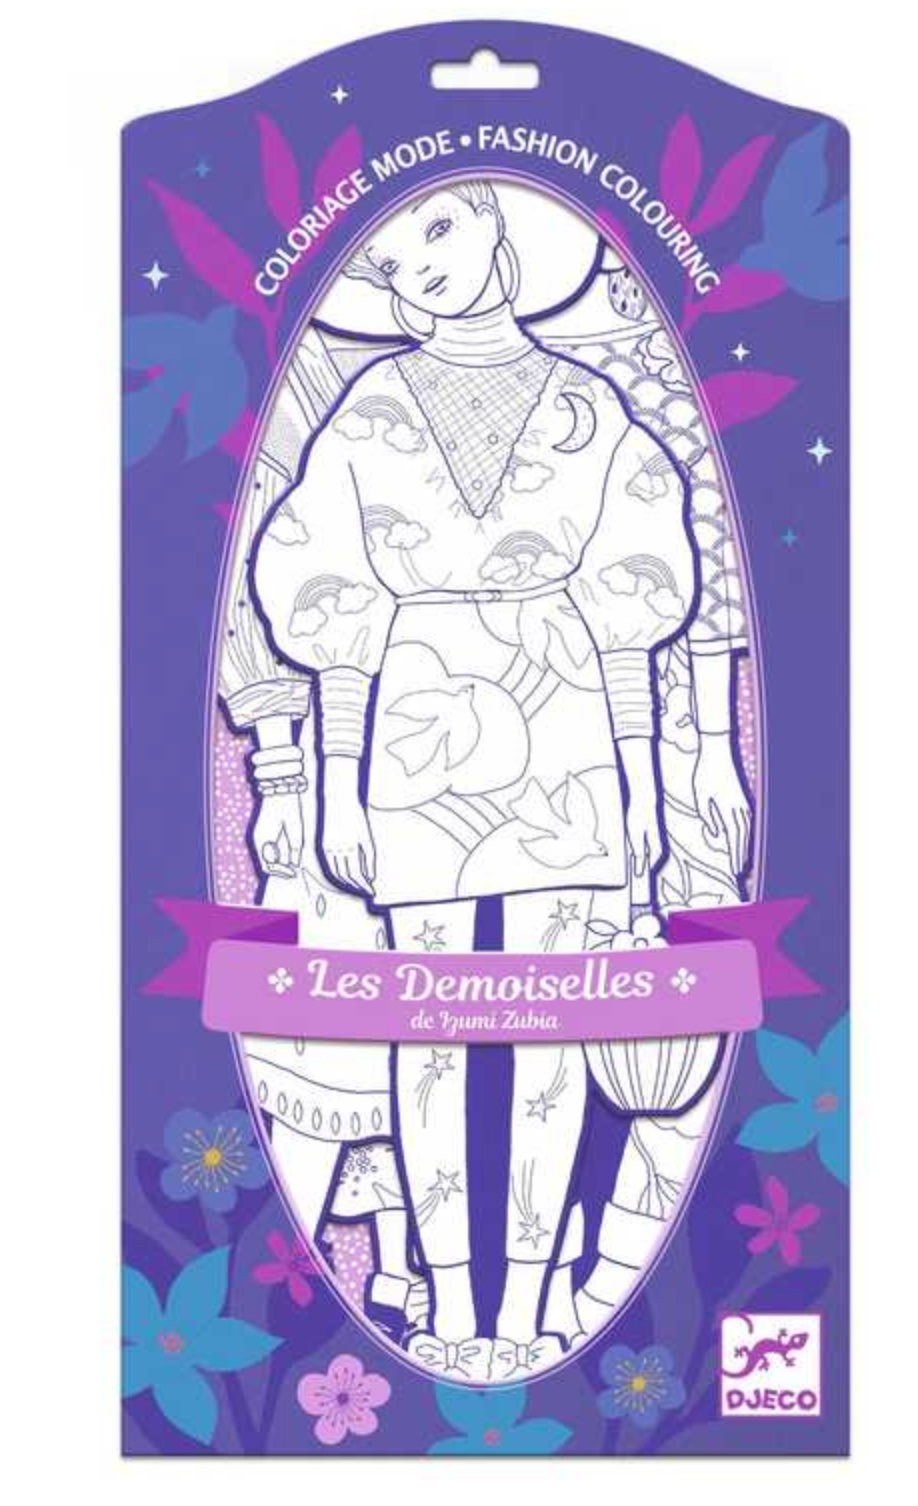 Demoiselles Cover